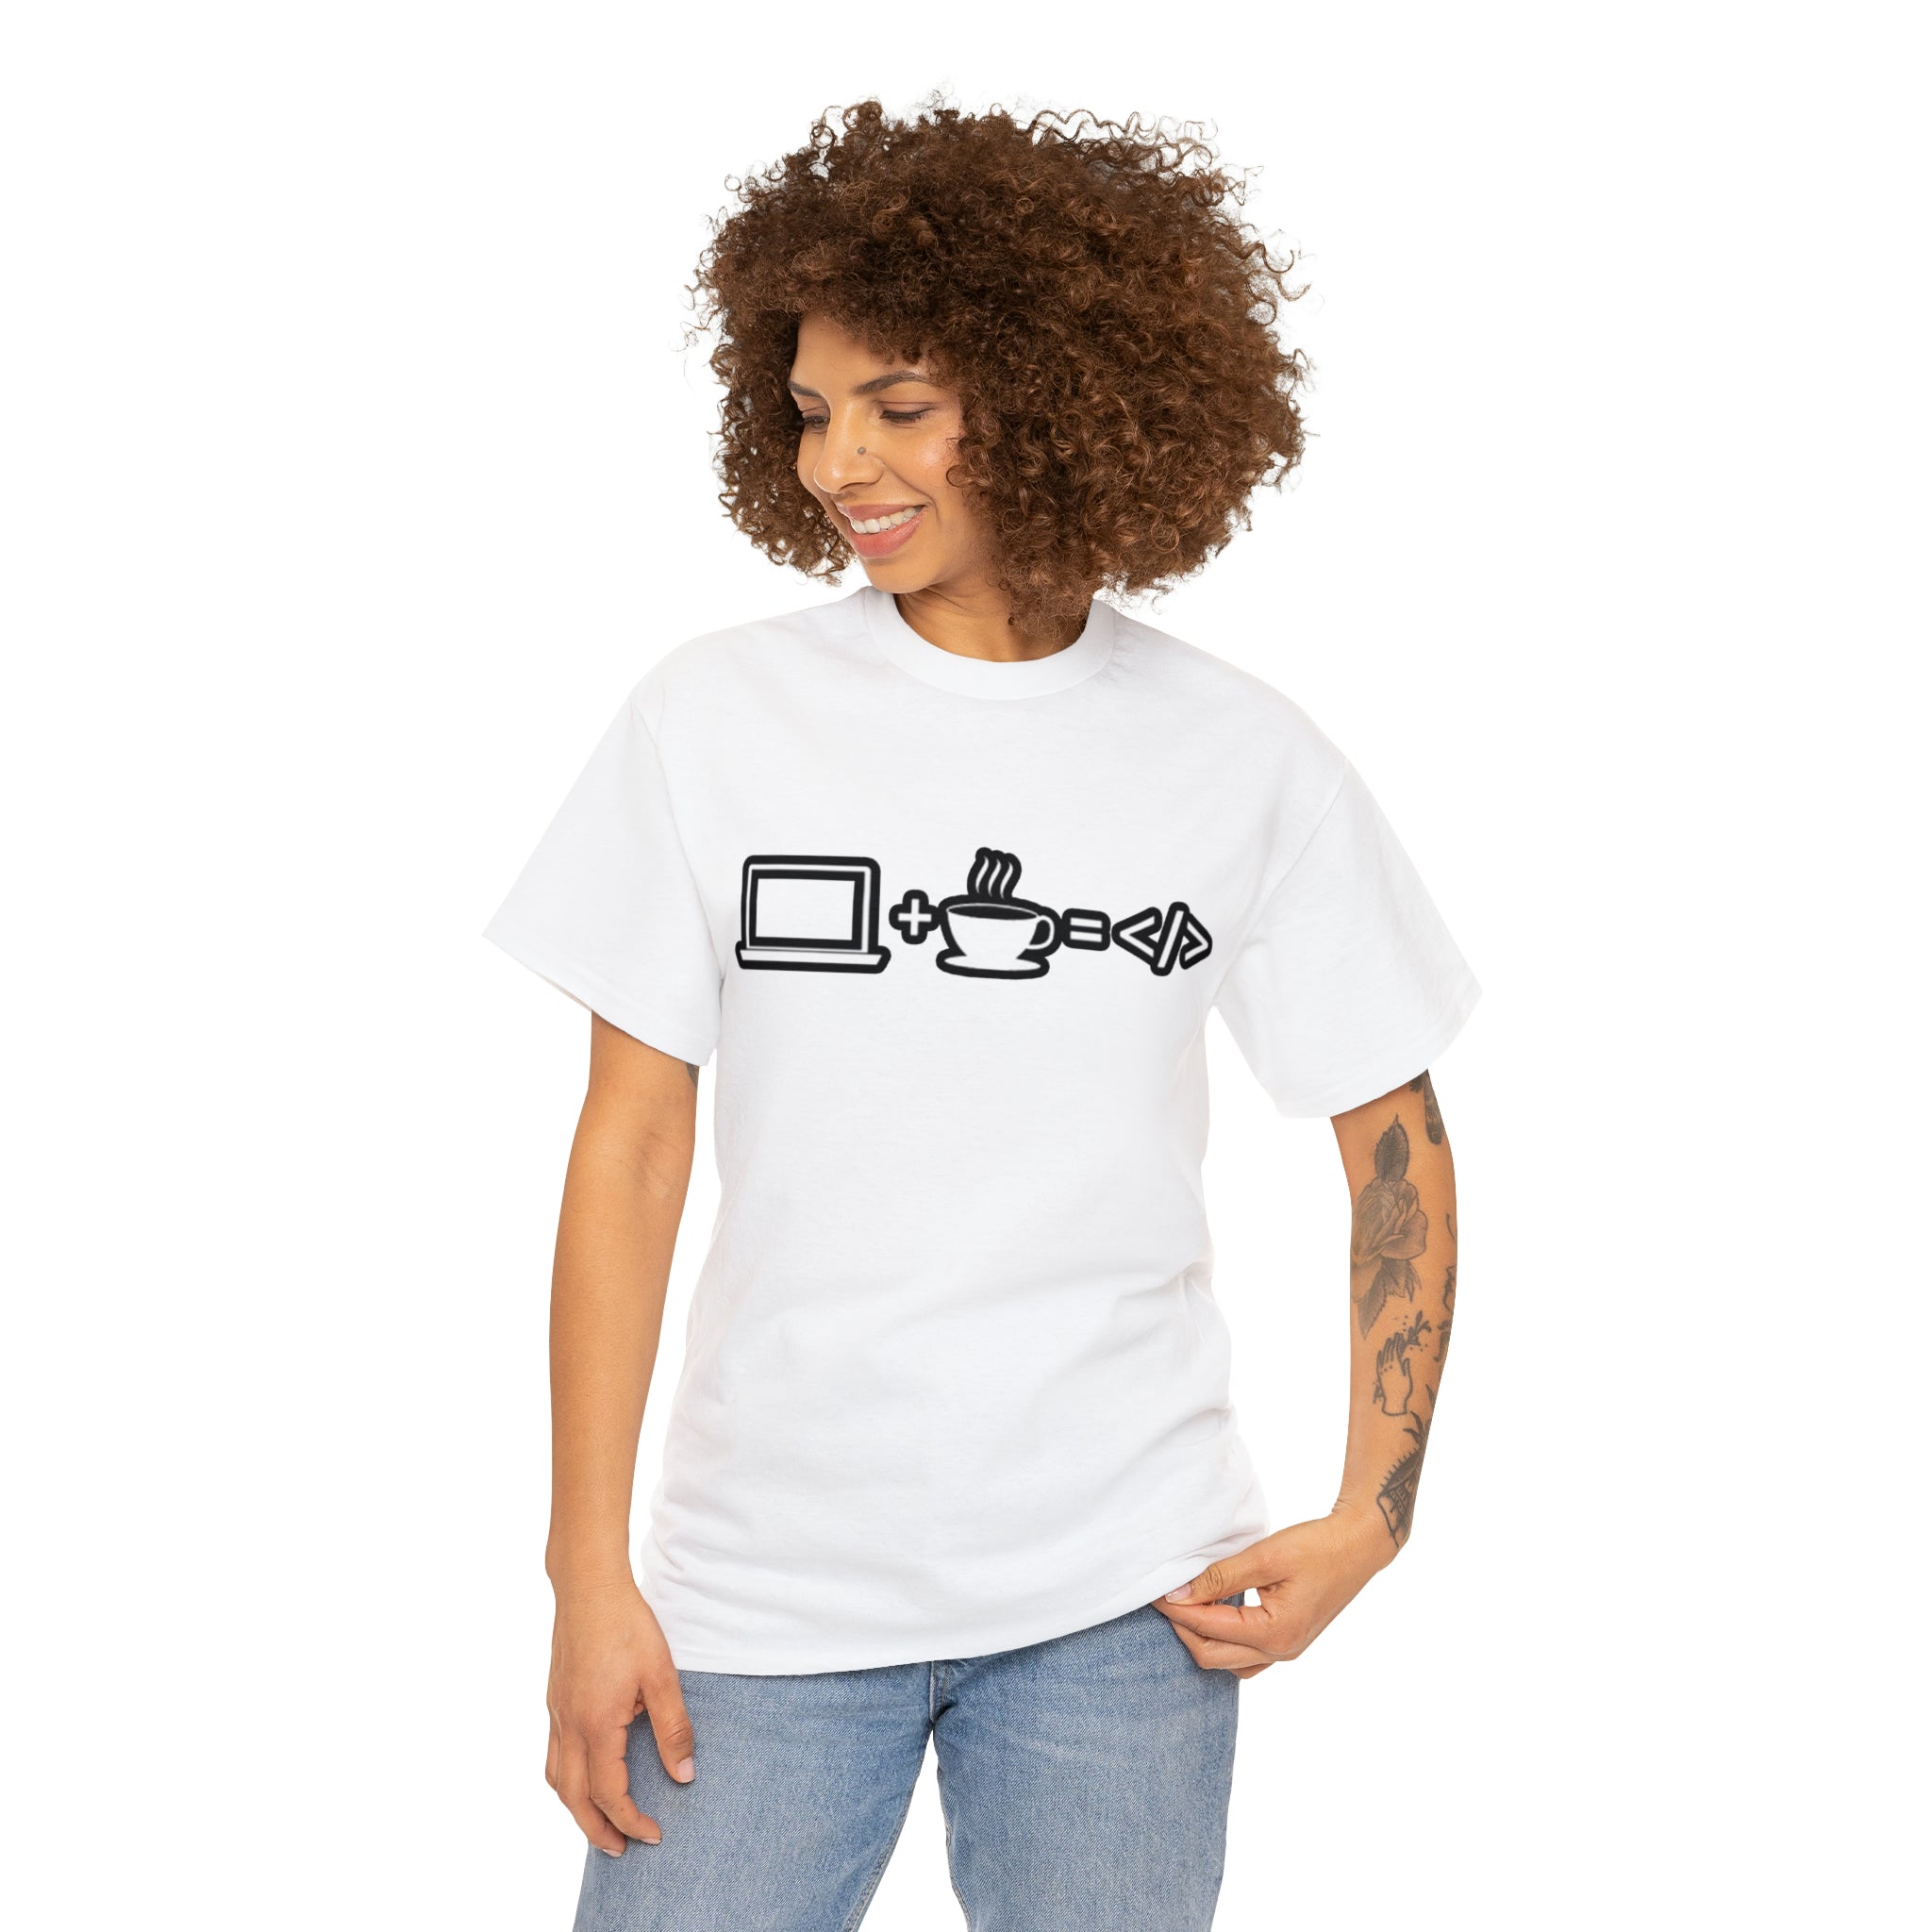 Laptop + Chai = Code T-Shirt Design by C&C